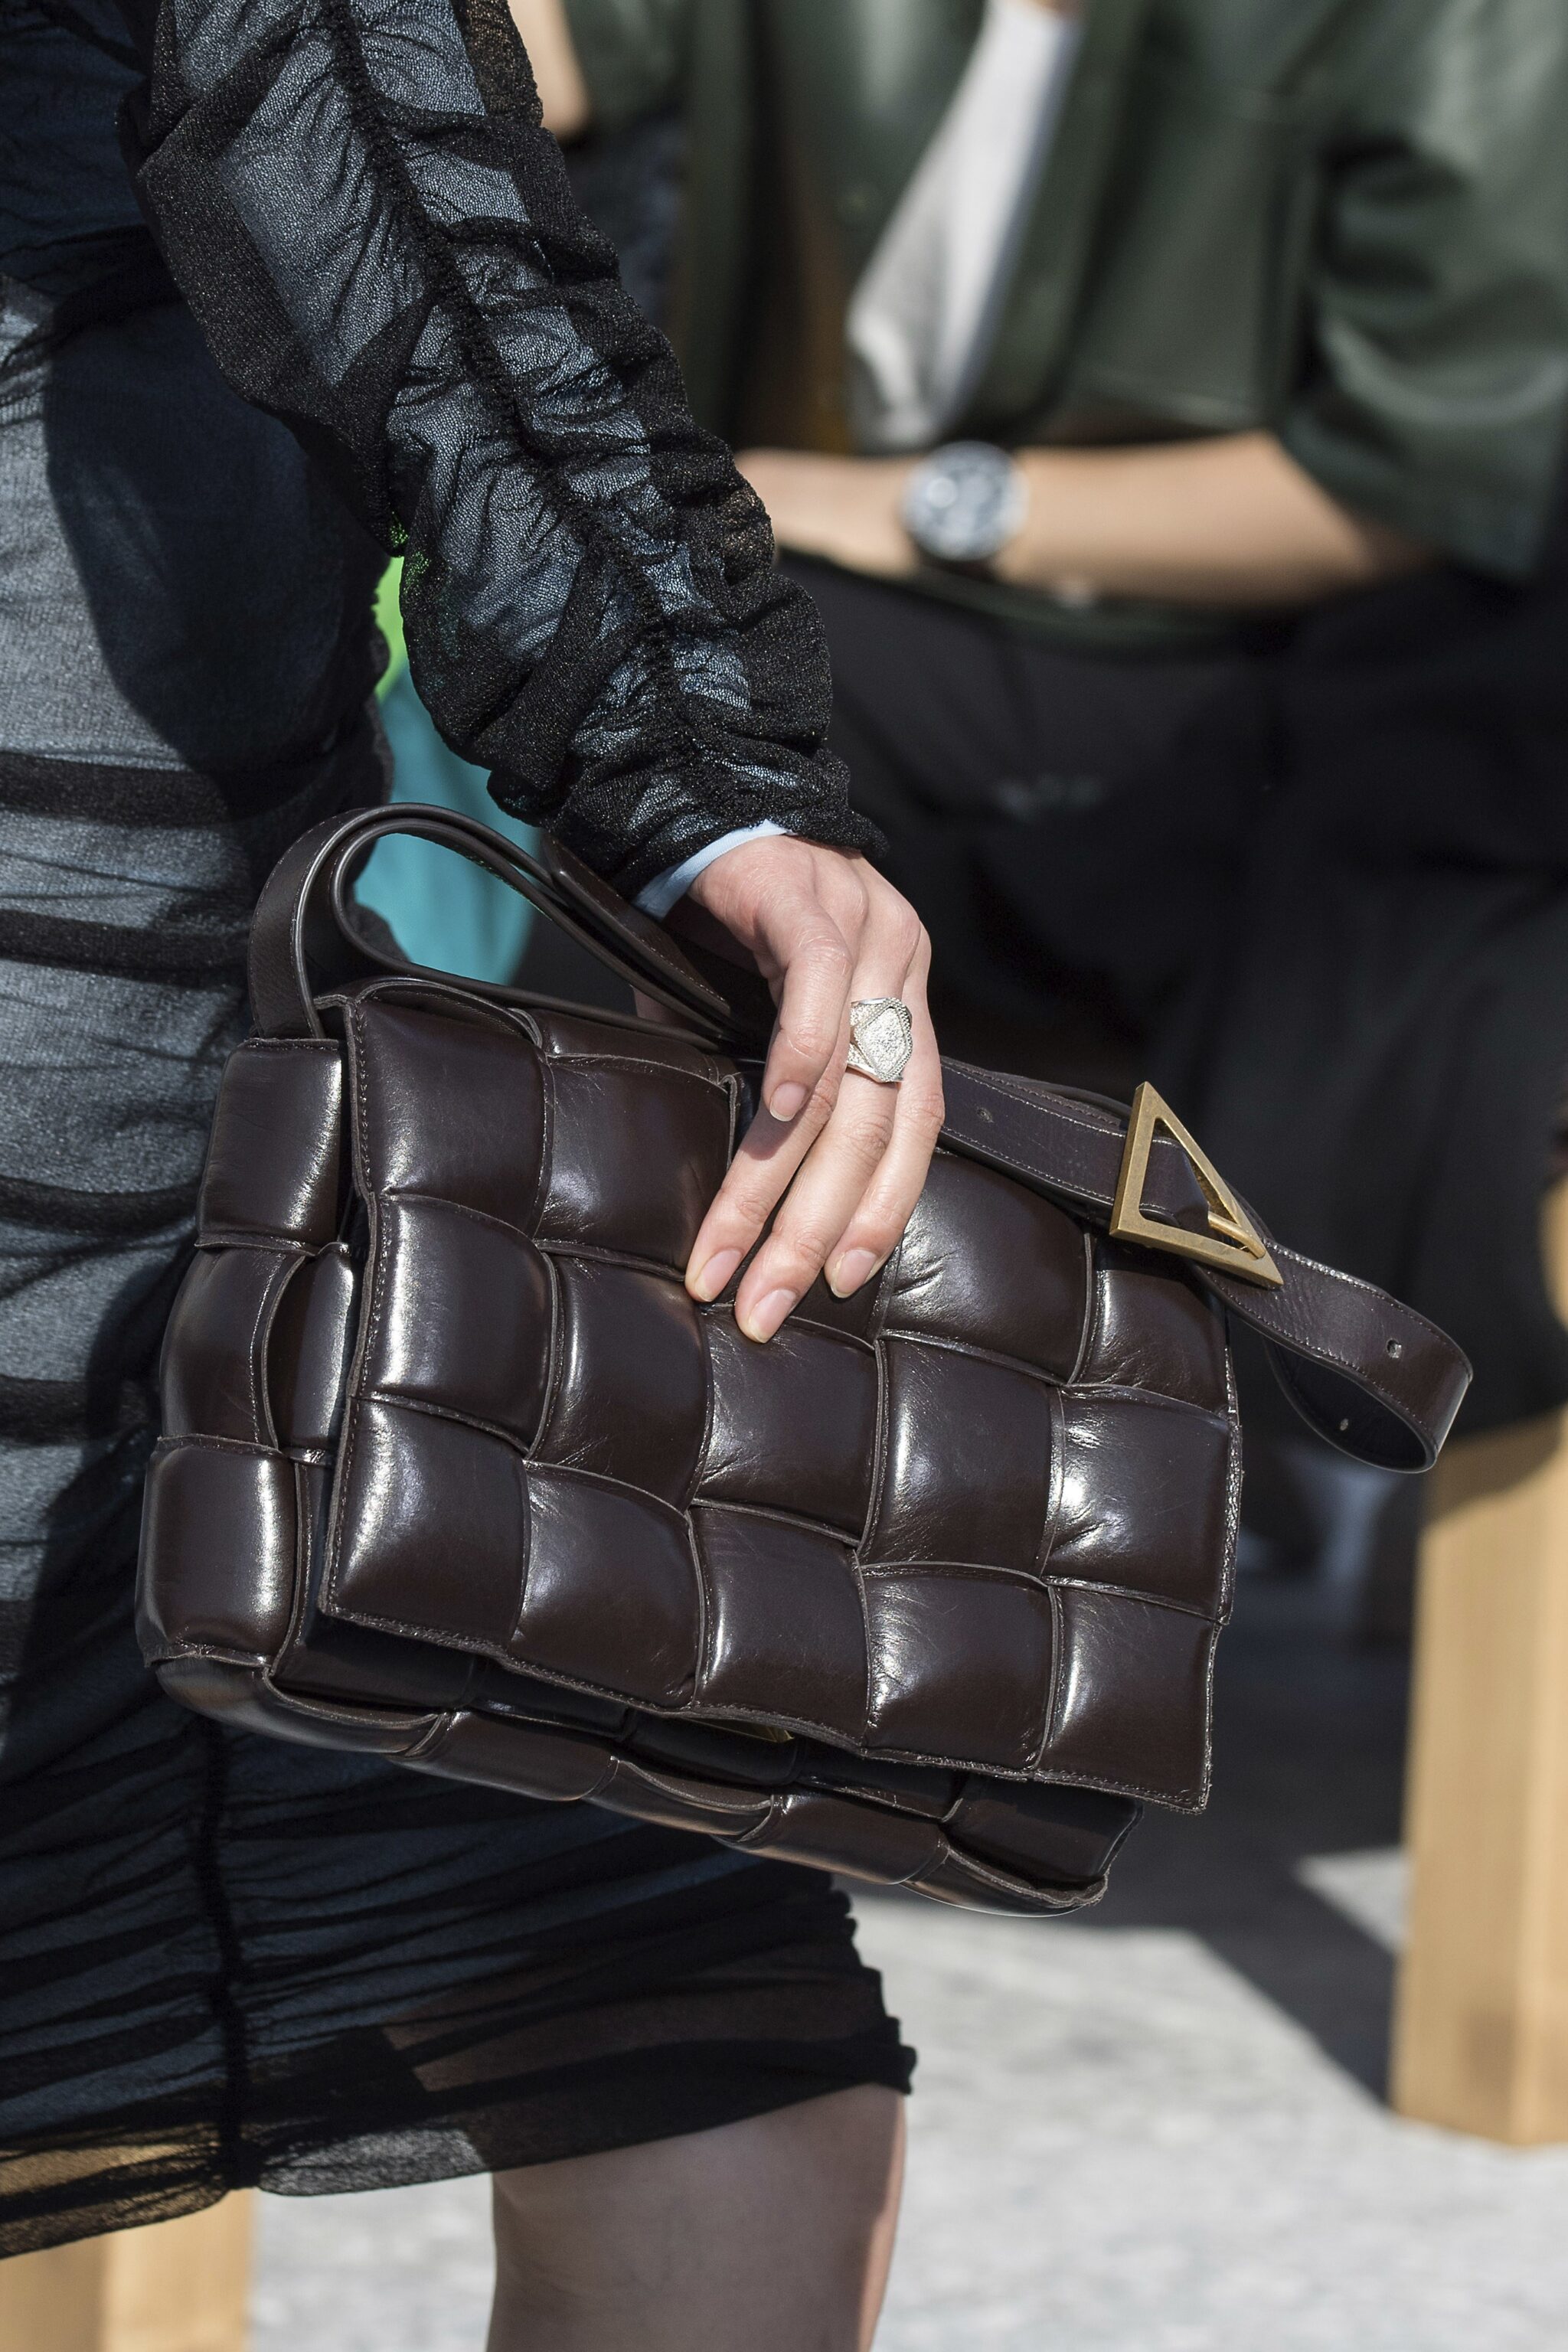 Bottega Veneta Fall/Winter 2019 Runway Bag Collection - Spotted